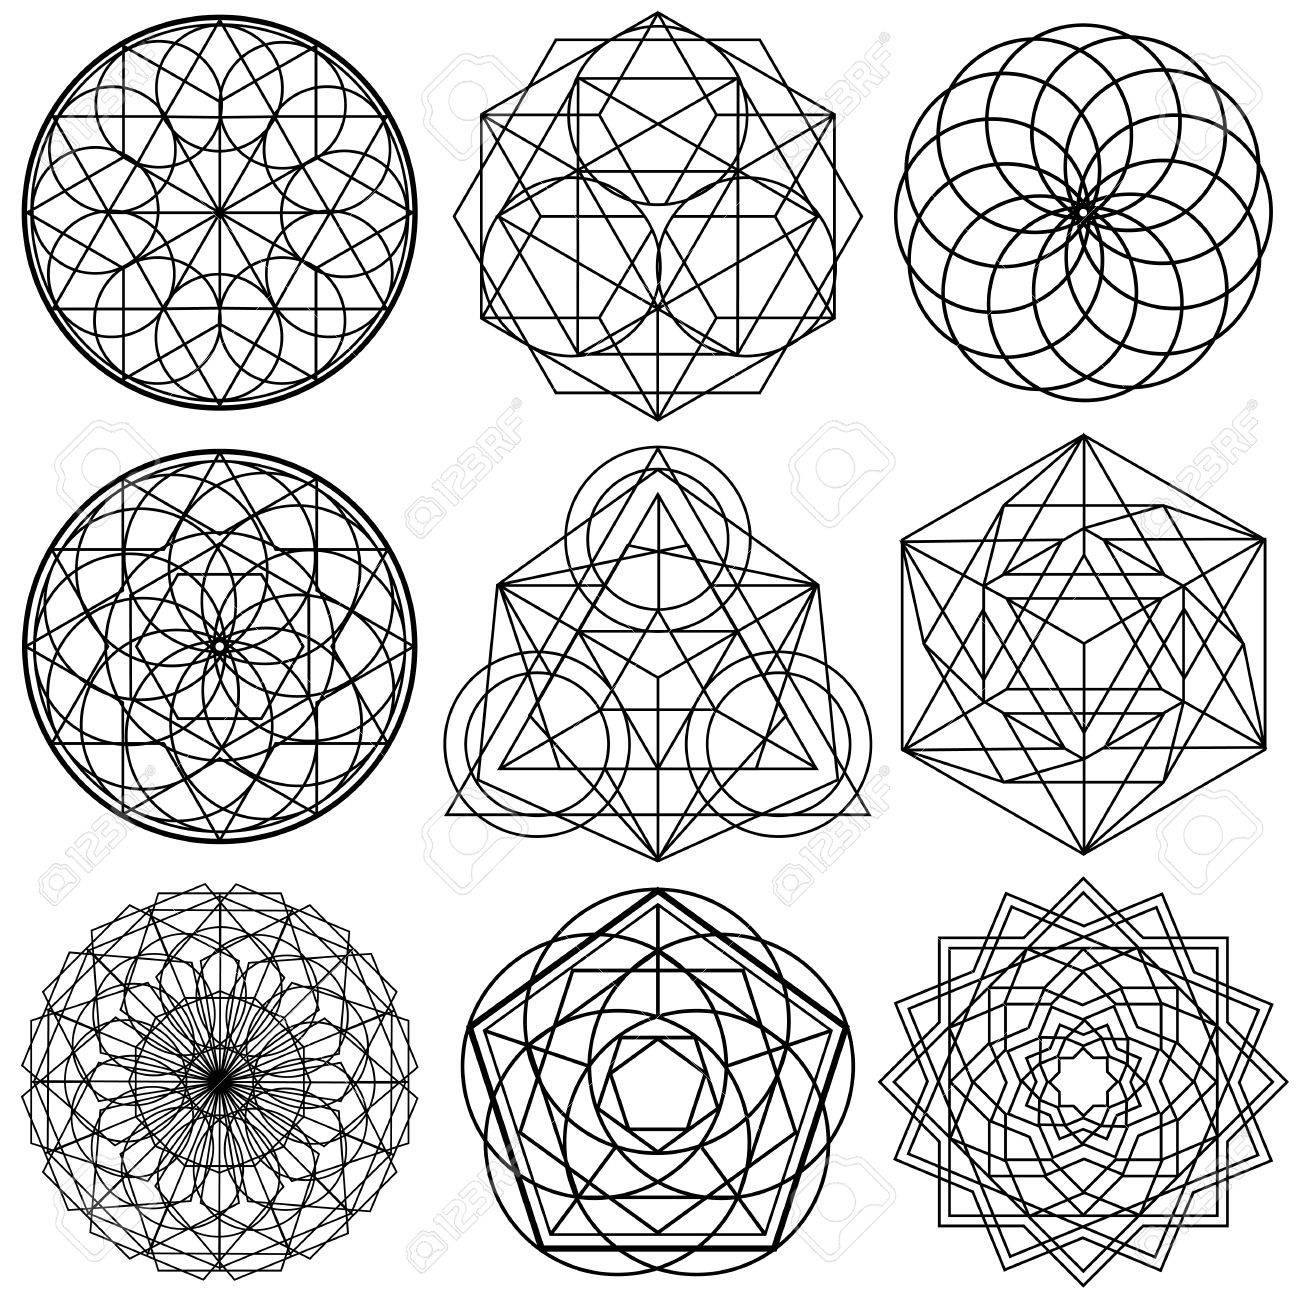 Image result for sacred geometry symbols